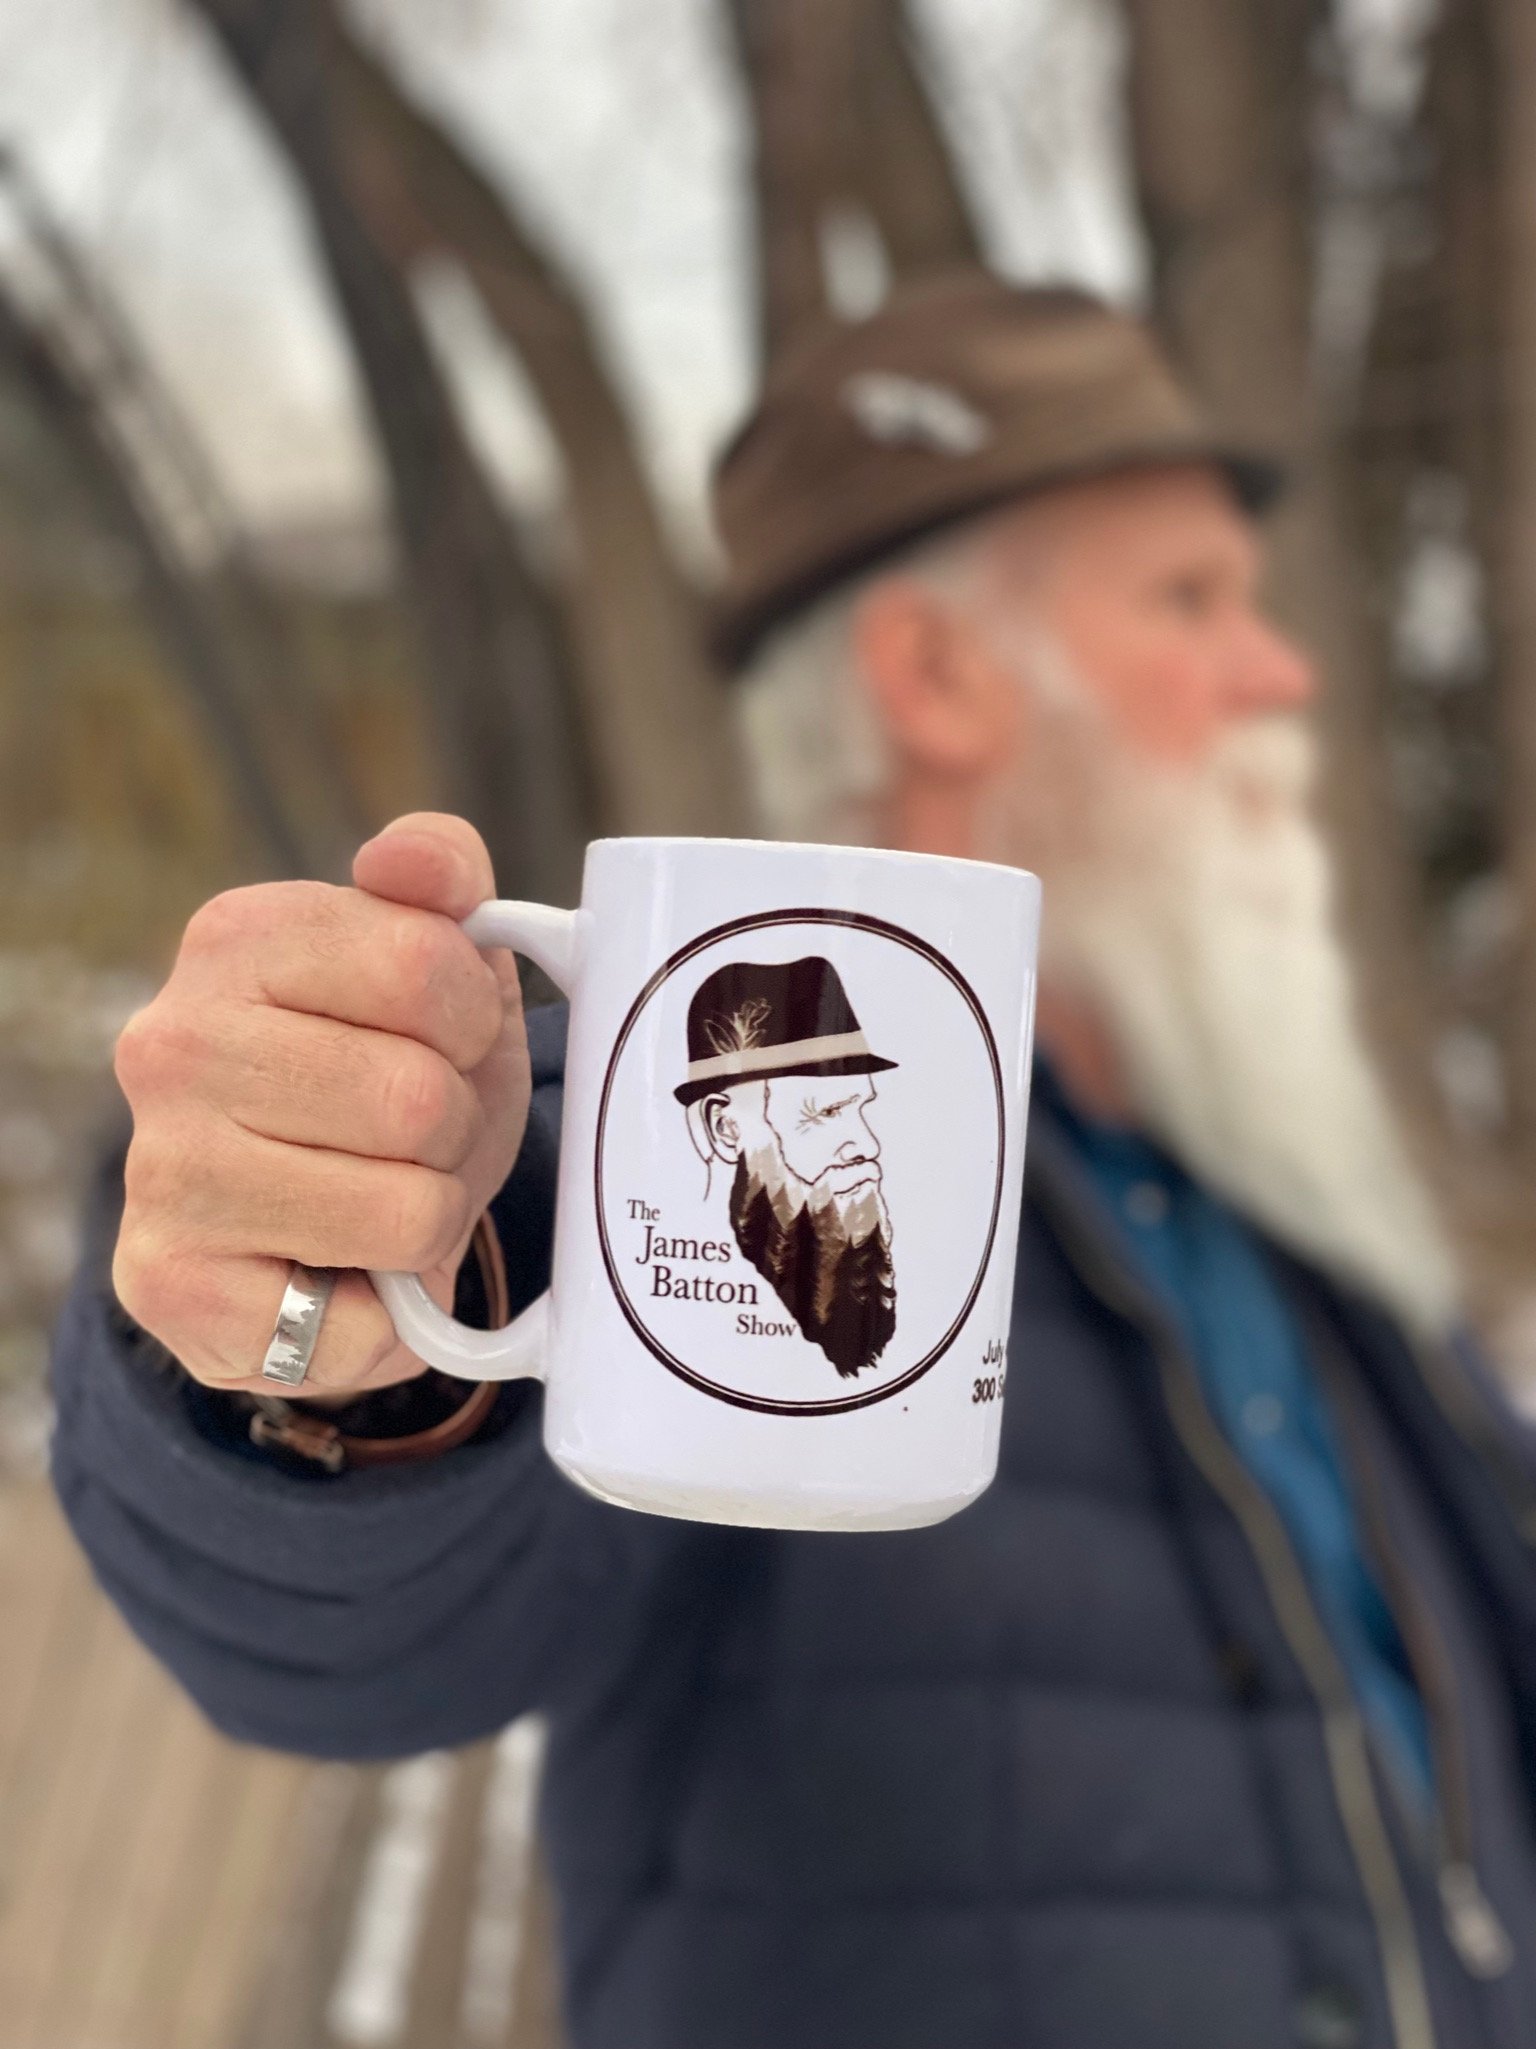 James Batton holding his signature coffee mug